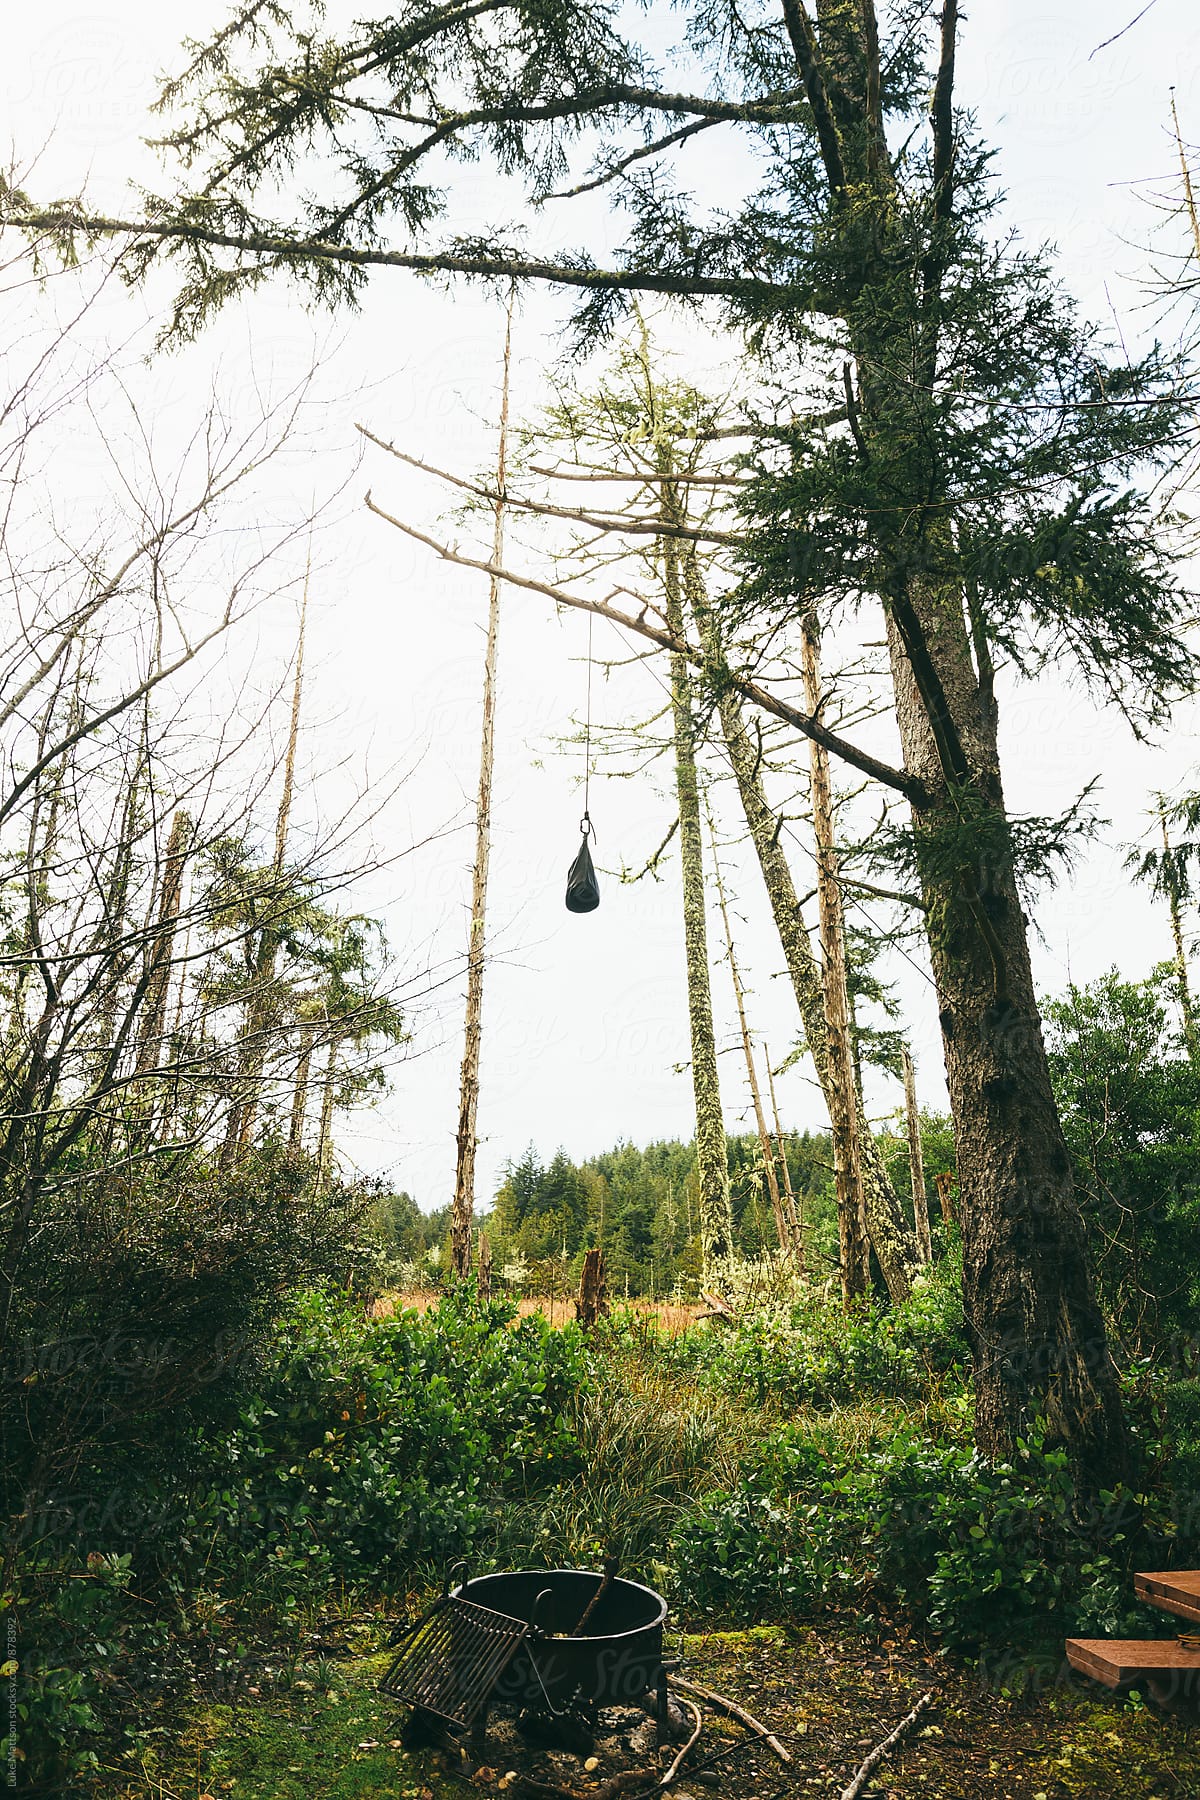 Bear Bag Hanging From Tree Branch by Stocksy Contributor Luke